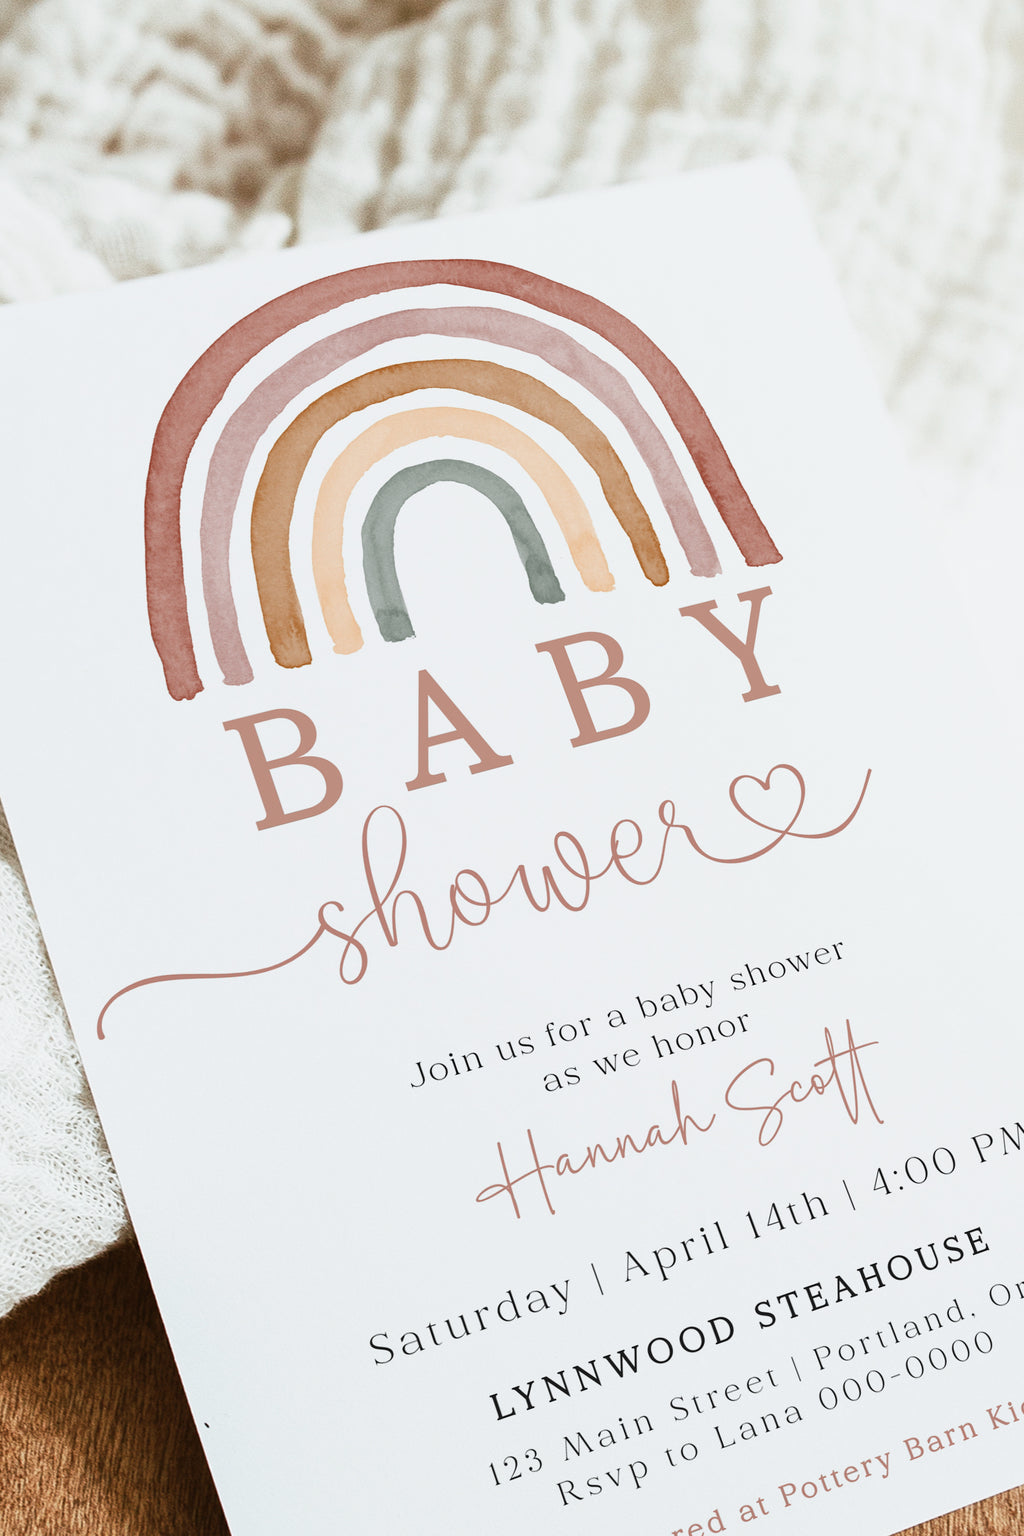 Rainbow Baby Shower Invitation | www.foreveryourprints.com